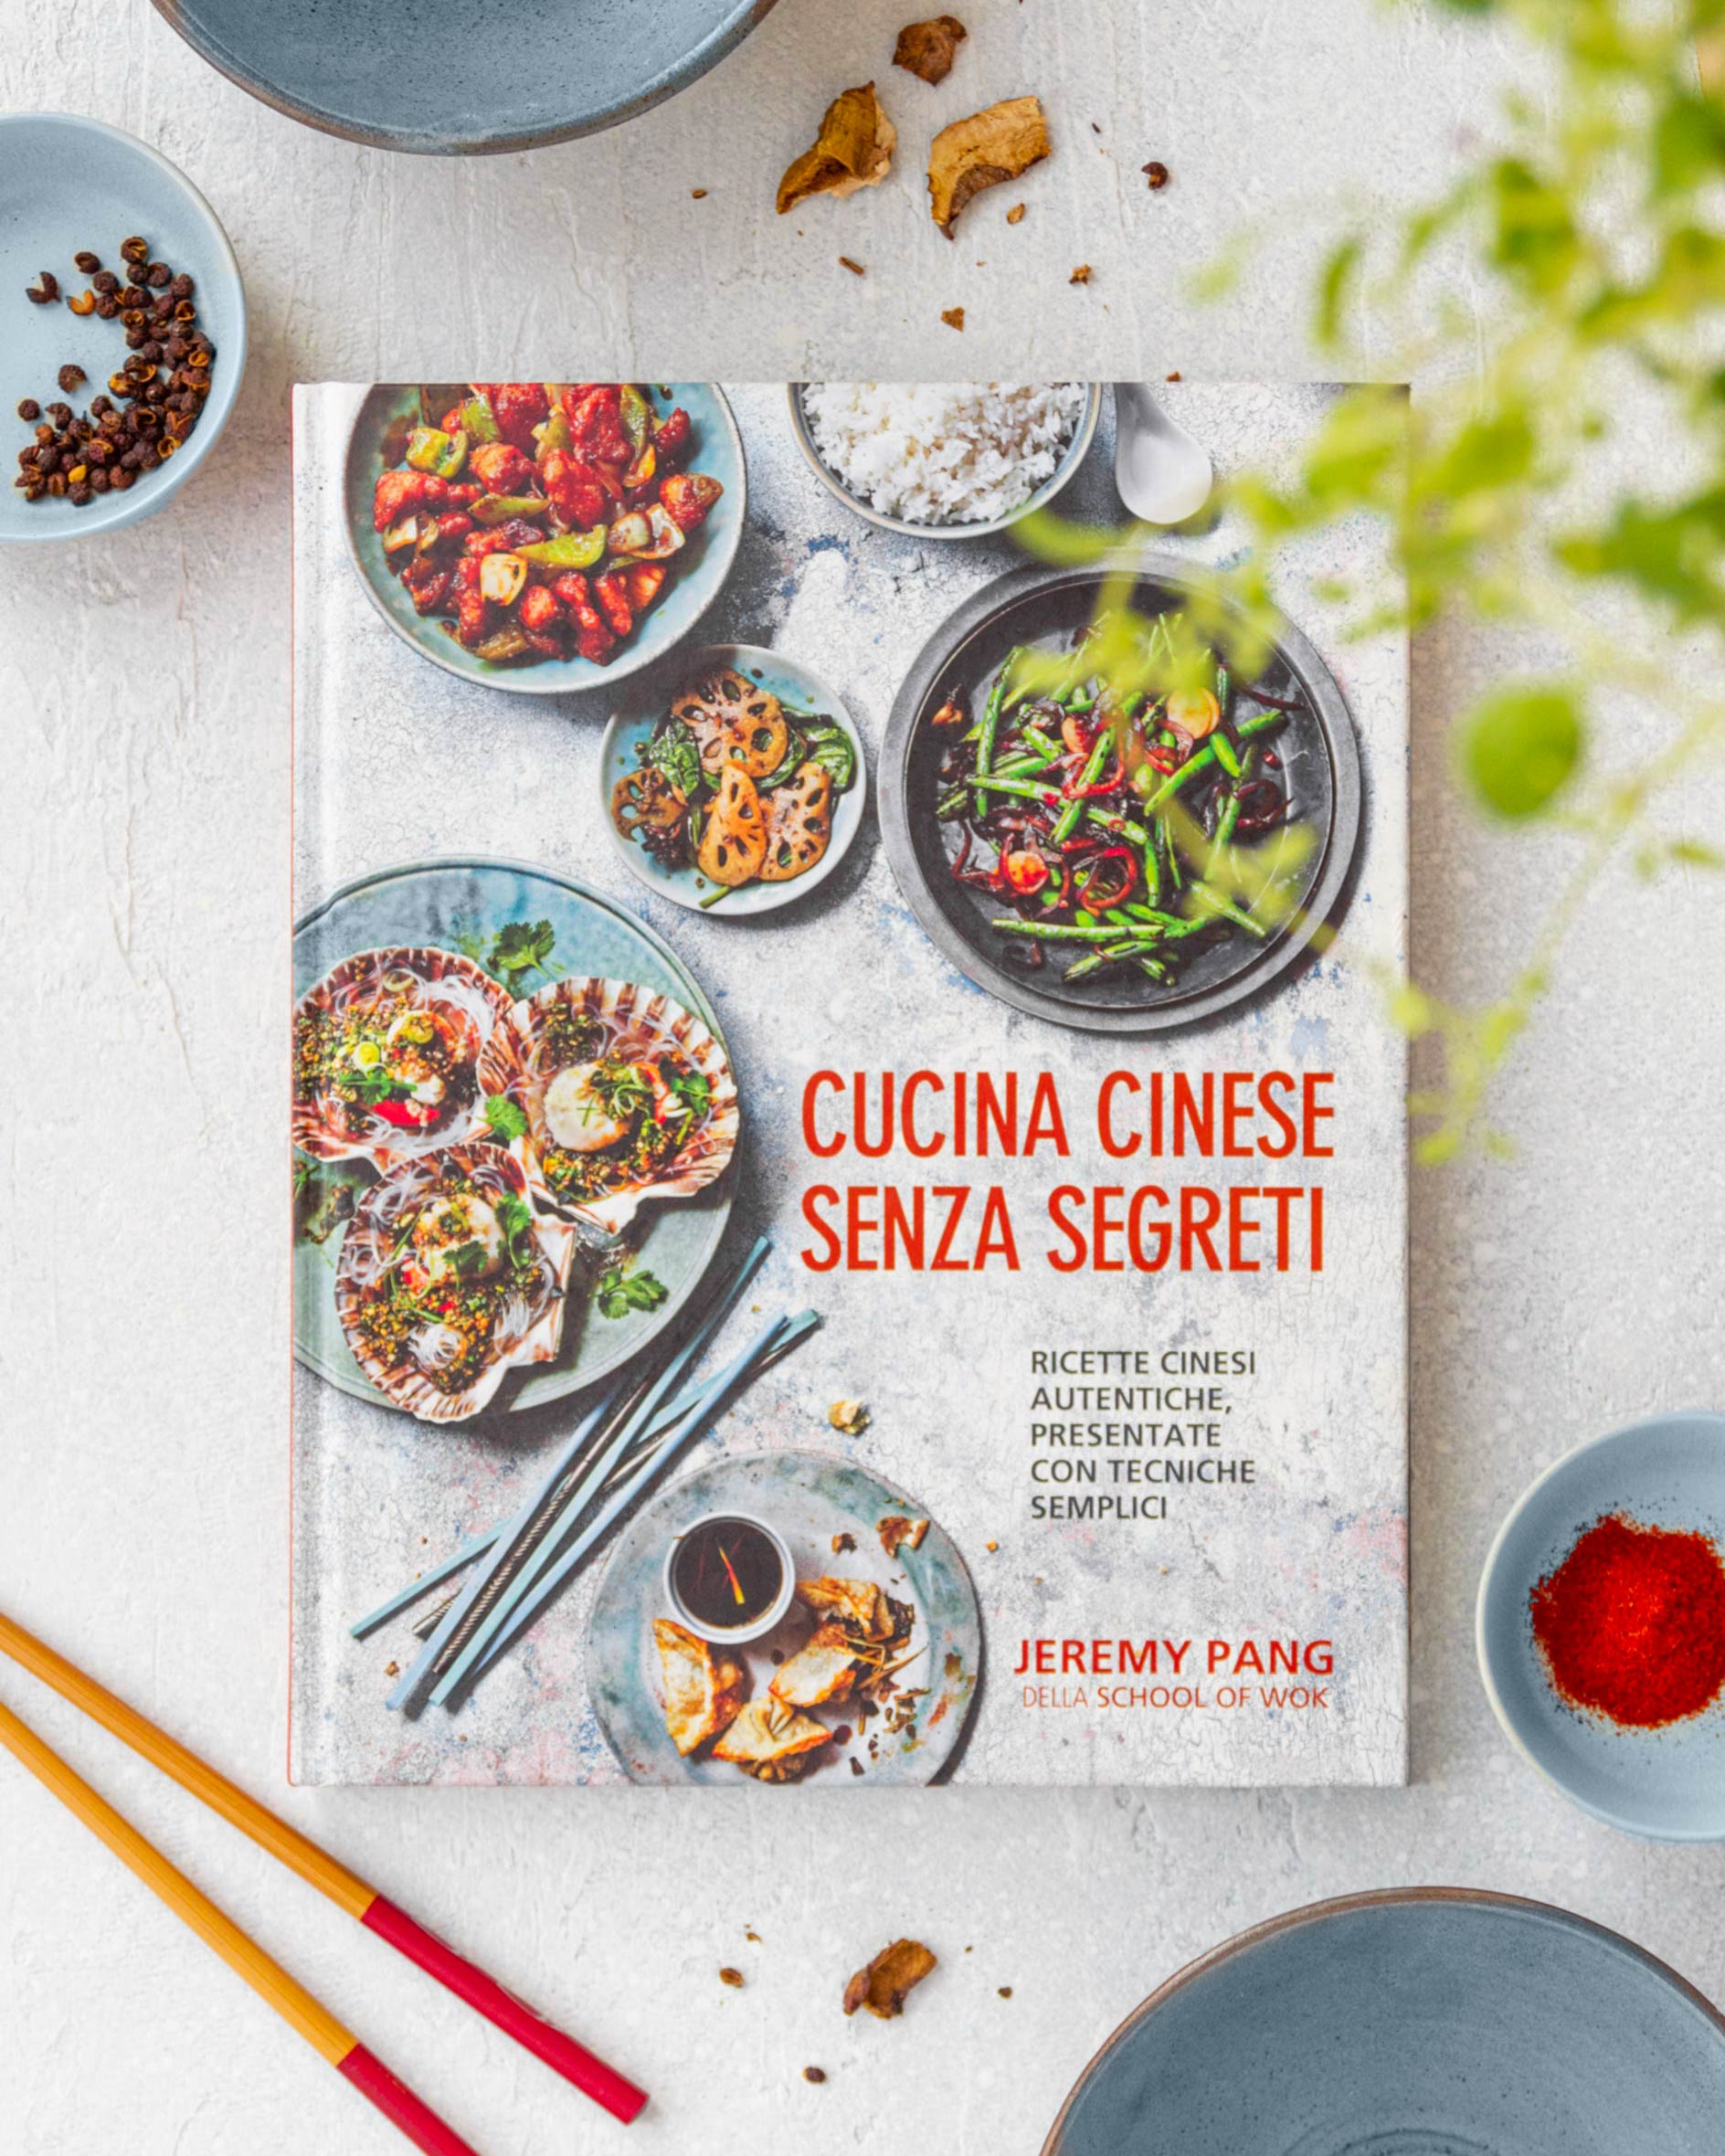 Cucina cinese senza segreti di Jeremy Pang